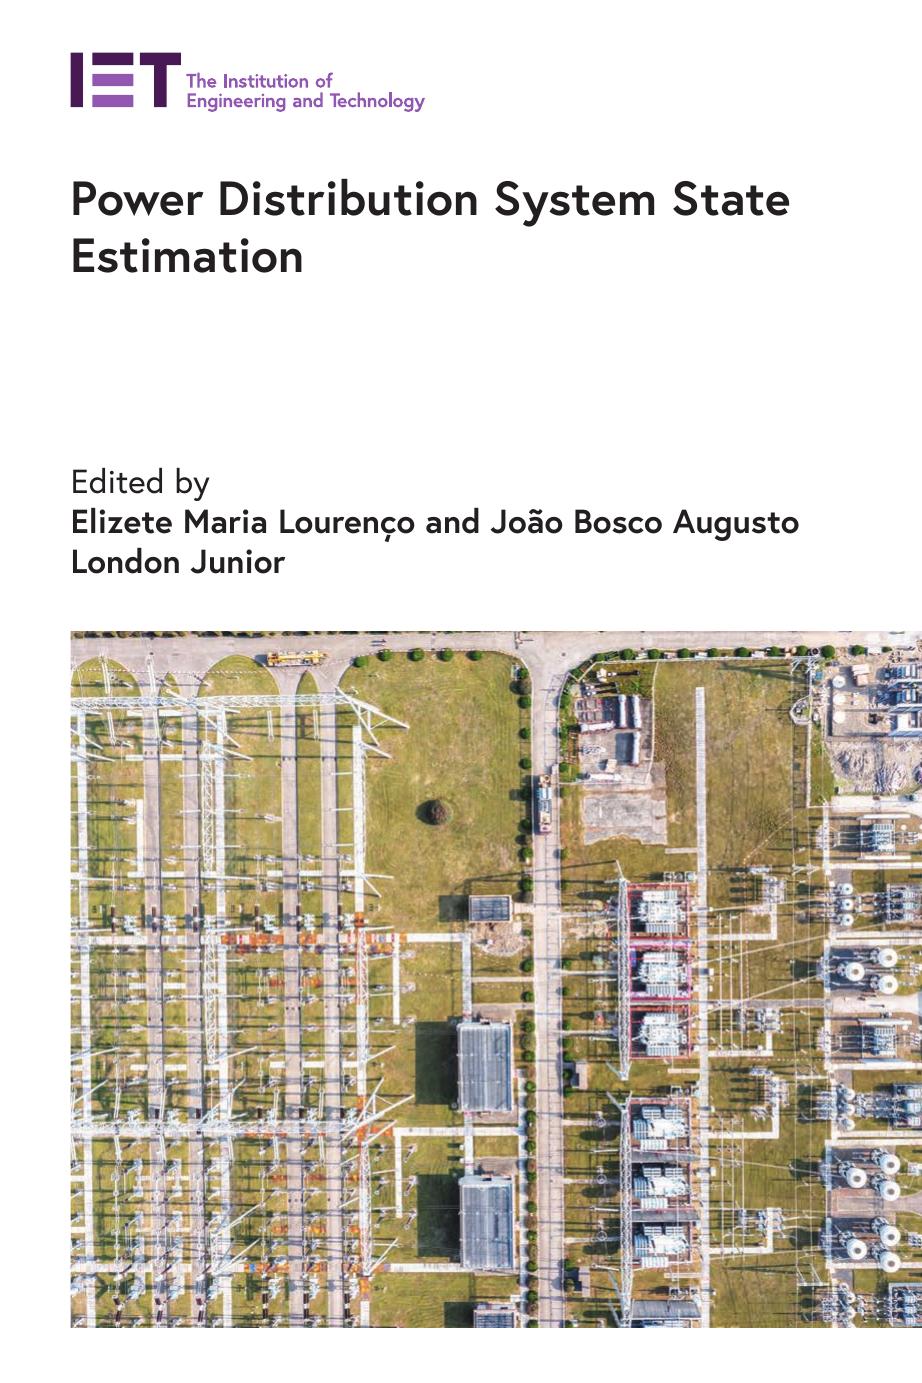 Power Distribution System State Estimation by Elizete Maria Lourenço Joao Bosco Augusto London Jr